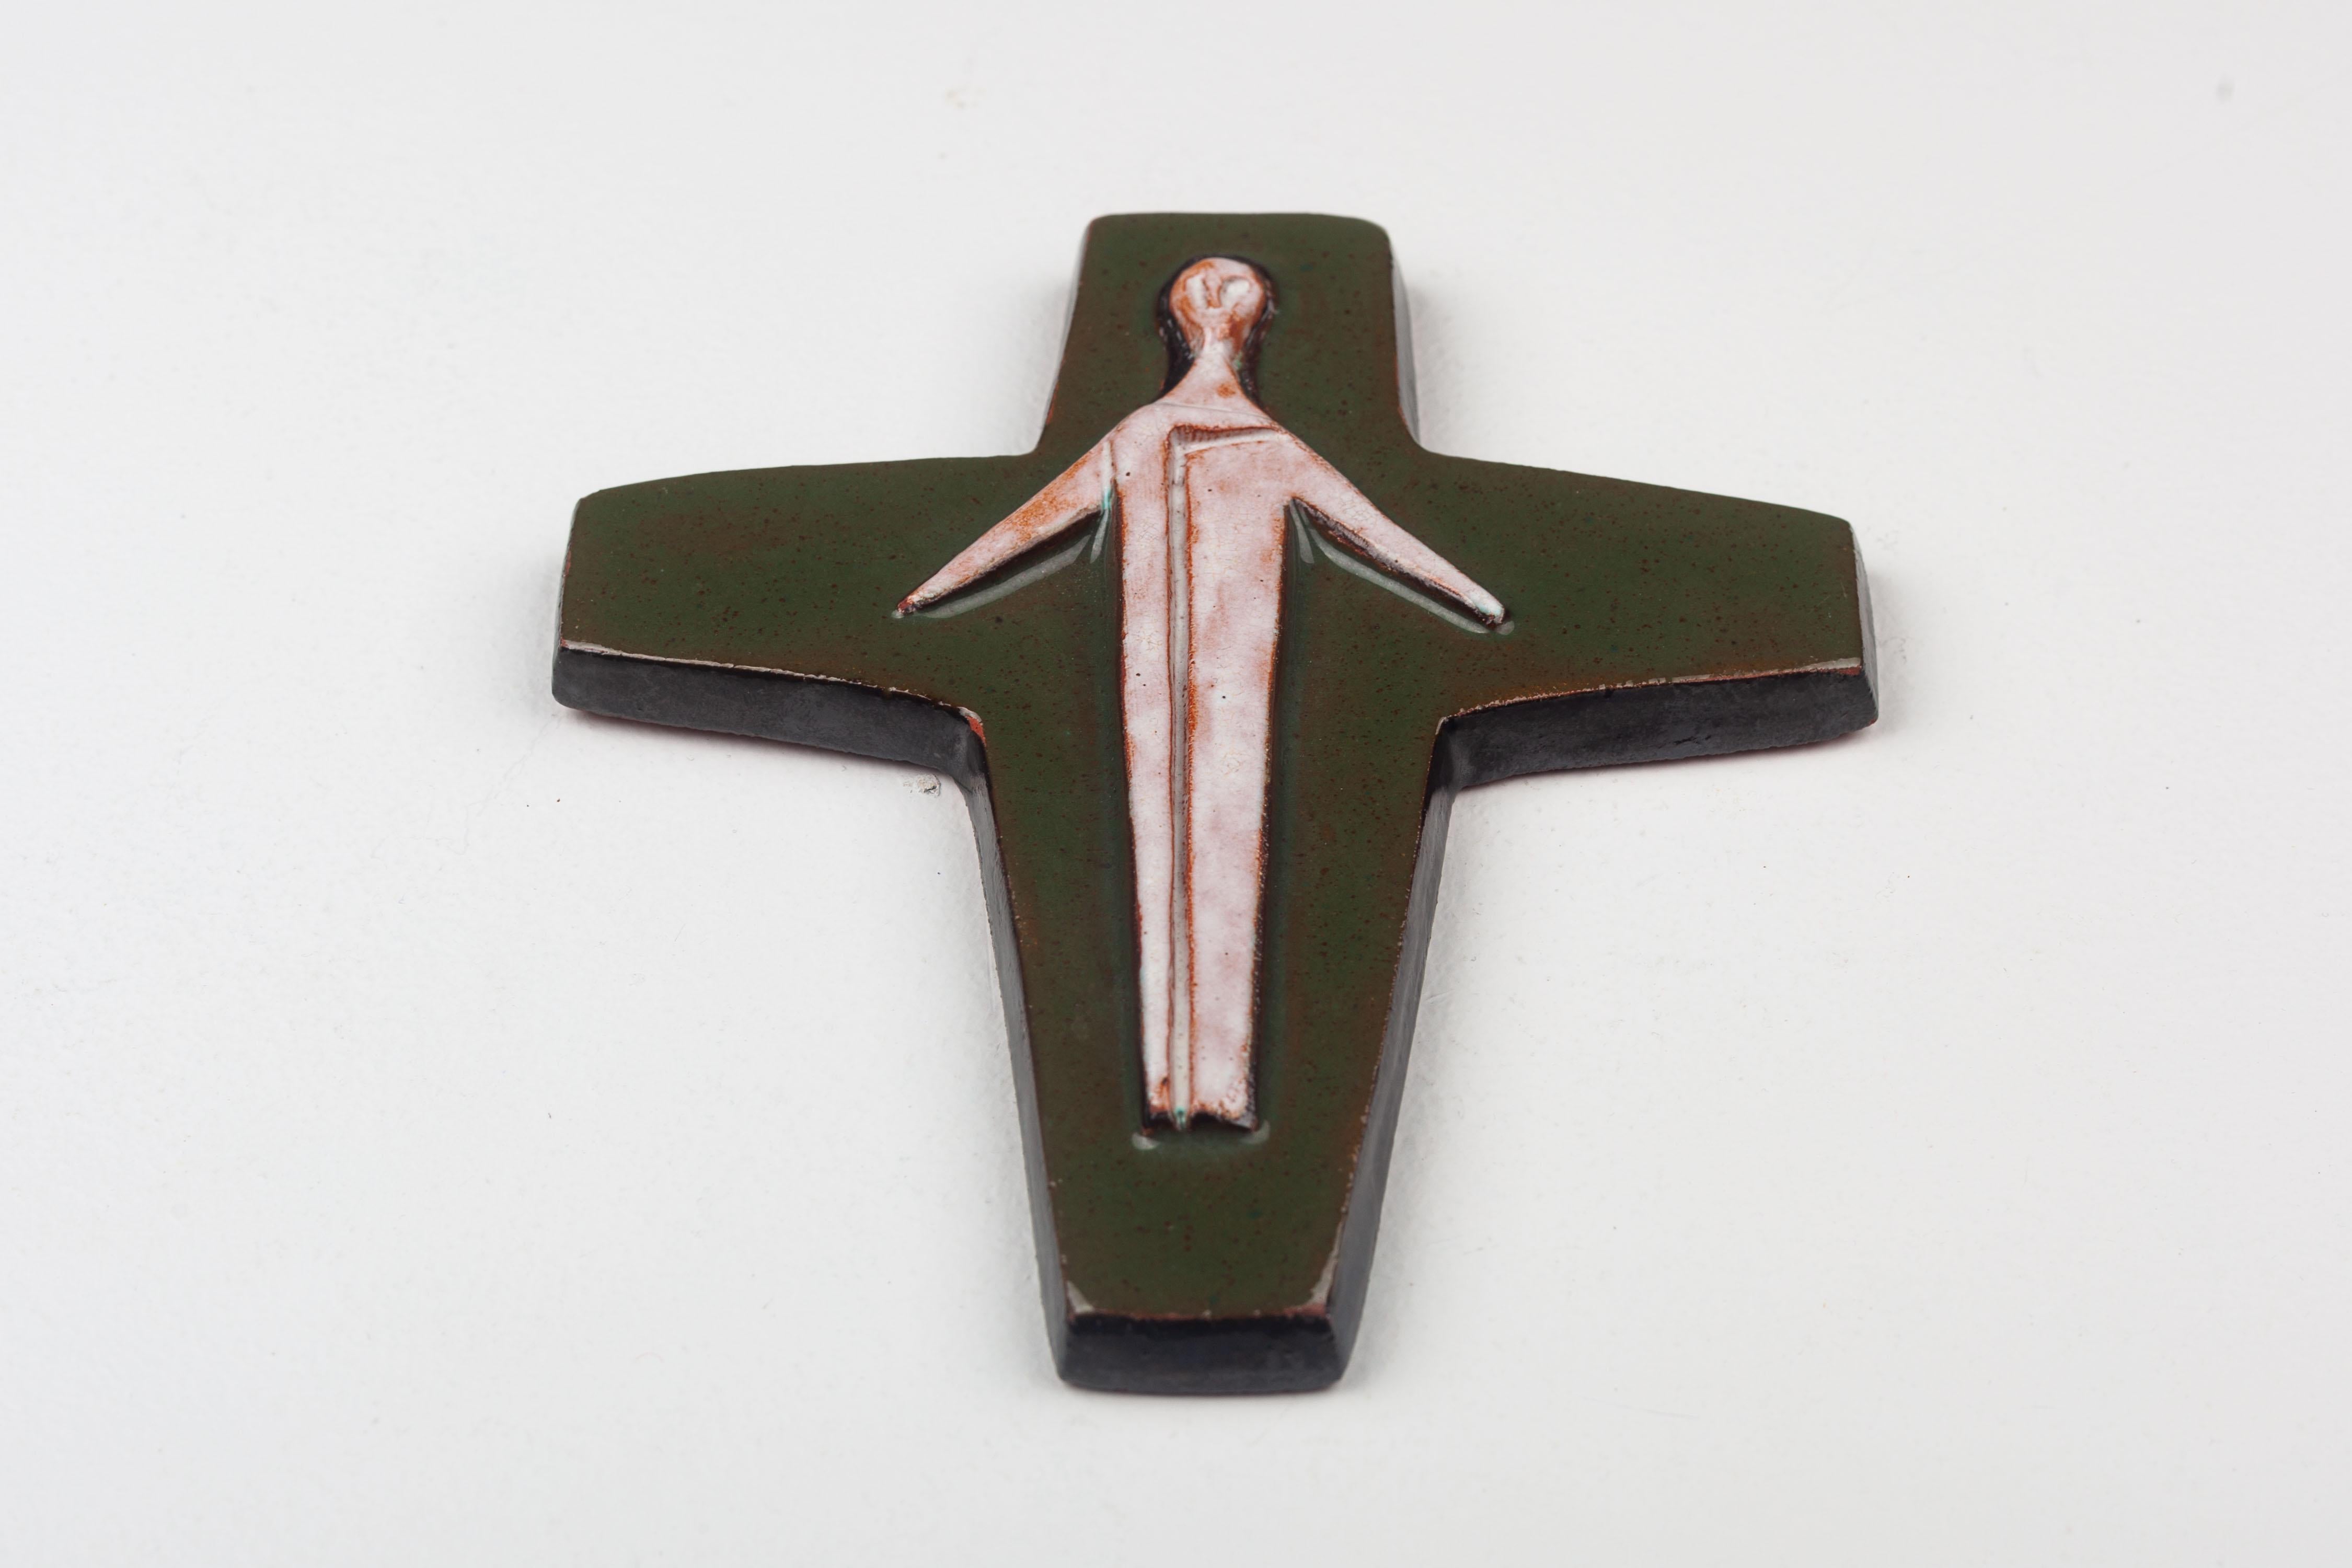 Midcentury European Glossy Ceramic Cross - Otherworldly Christ Figure For Sale 3